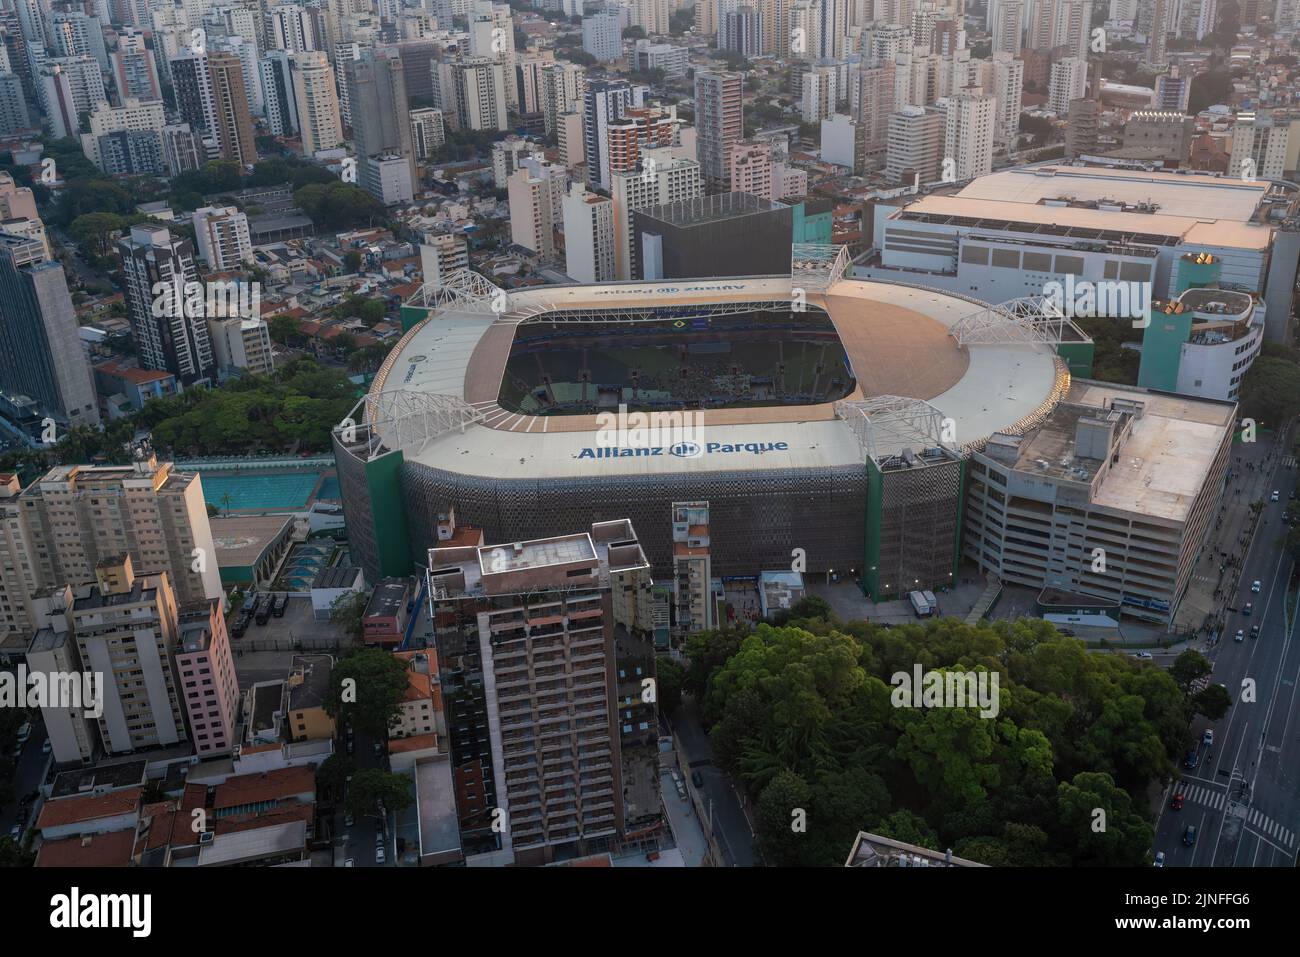 Aerial view of Allianz Parque Soccer Stadium of Palmeiras Football Club - Sao Paulo, Brazil Stock Photo